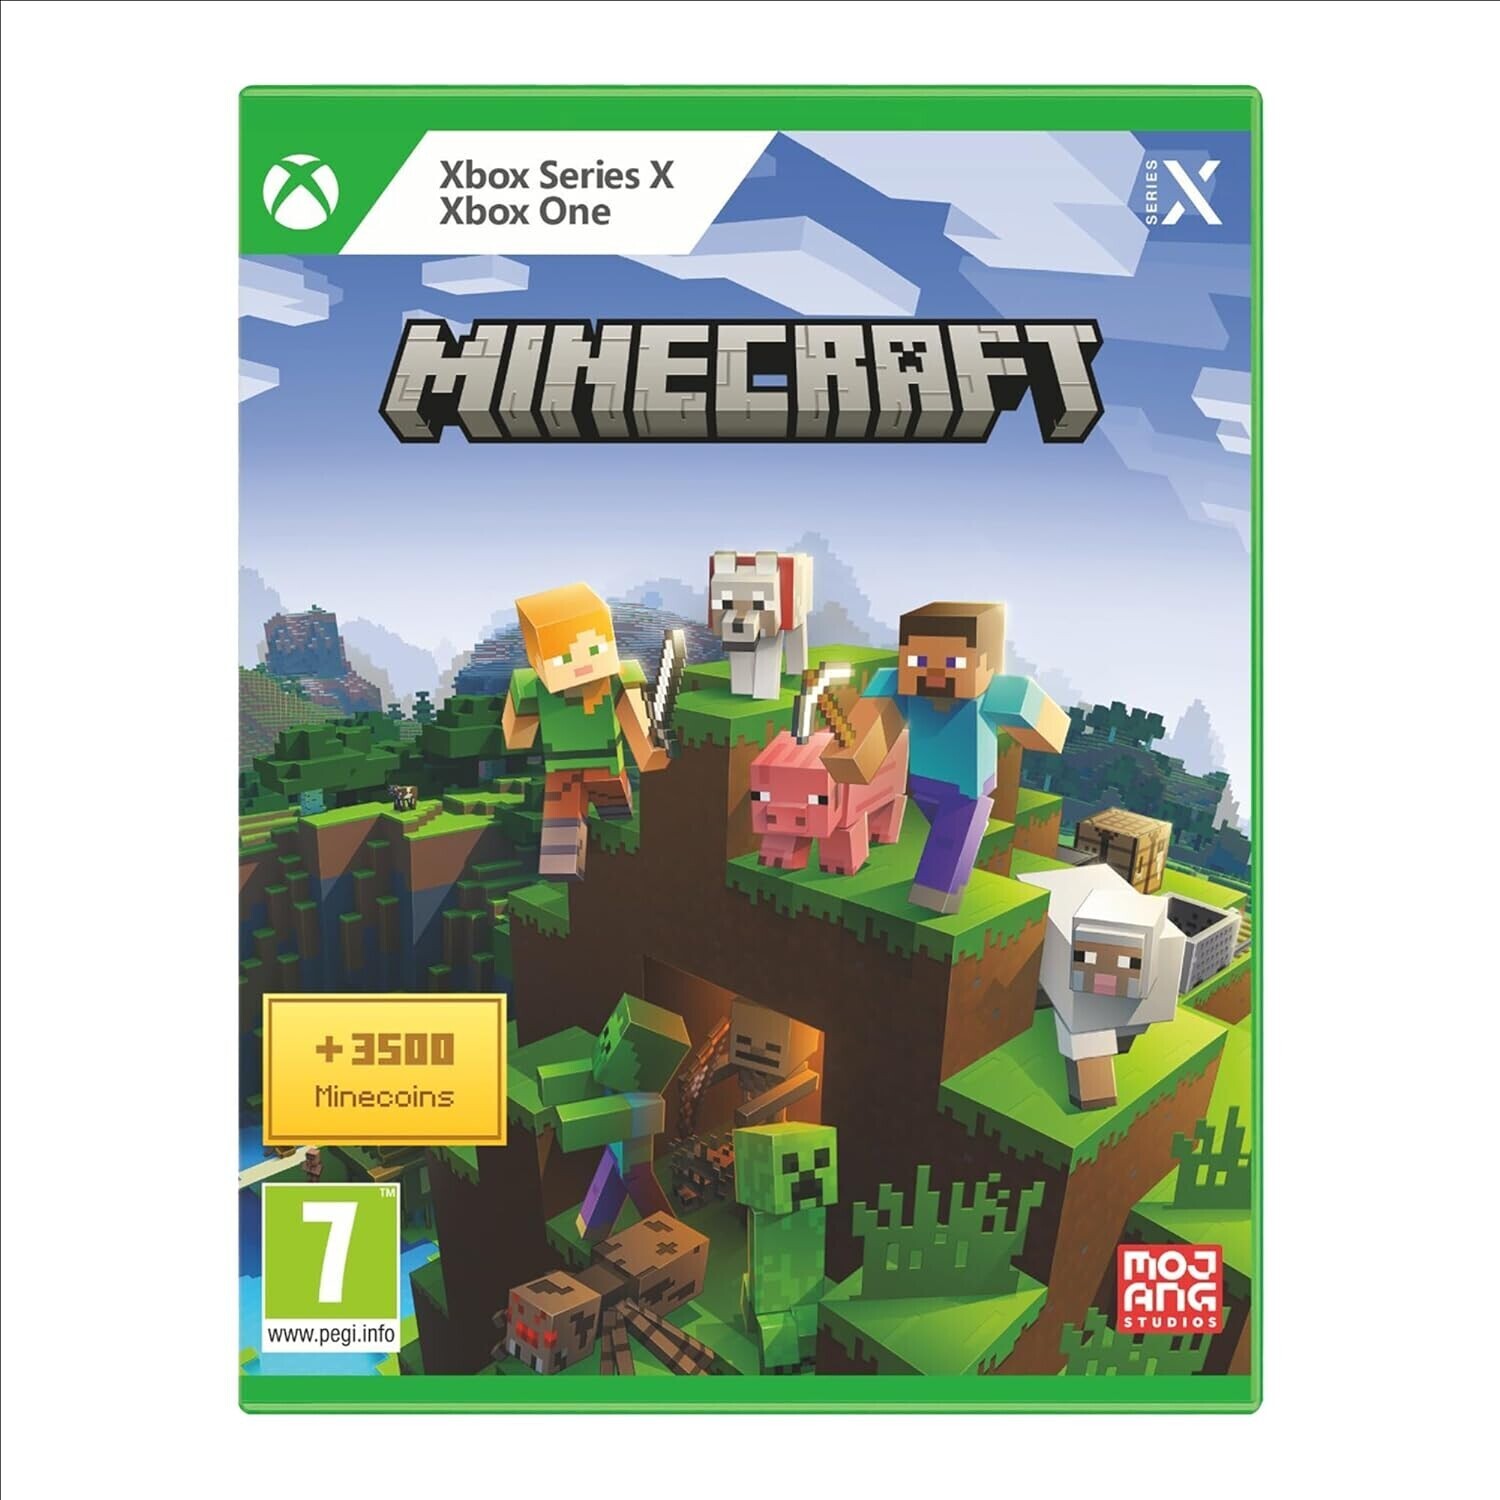 Photos - Game Microsoft Minecraft + 3500 Minecoins  (Xbox One/Xbox Series X)